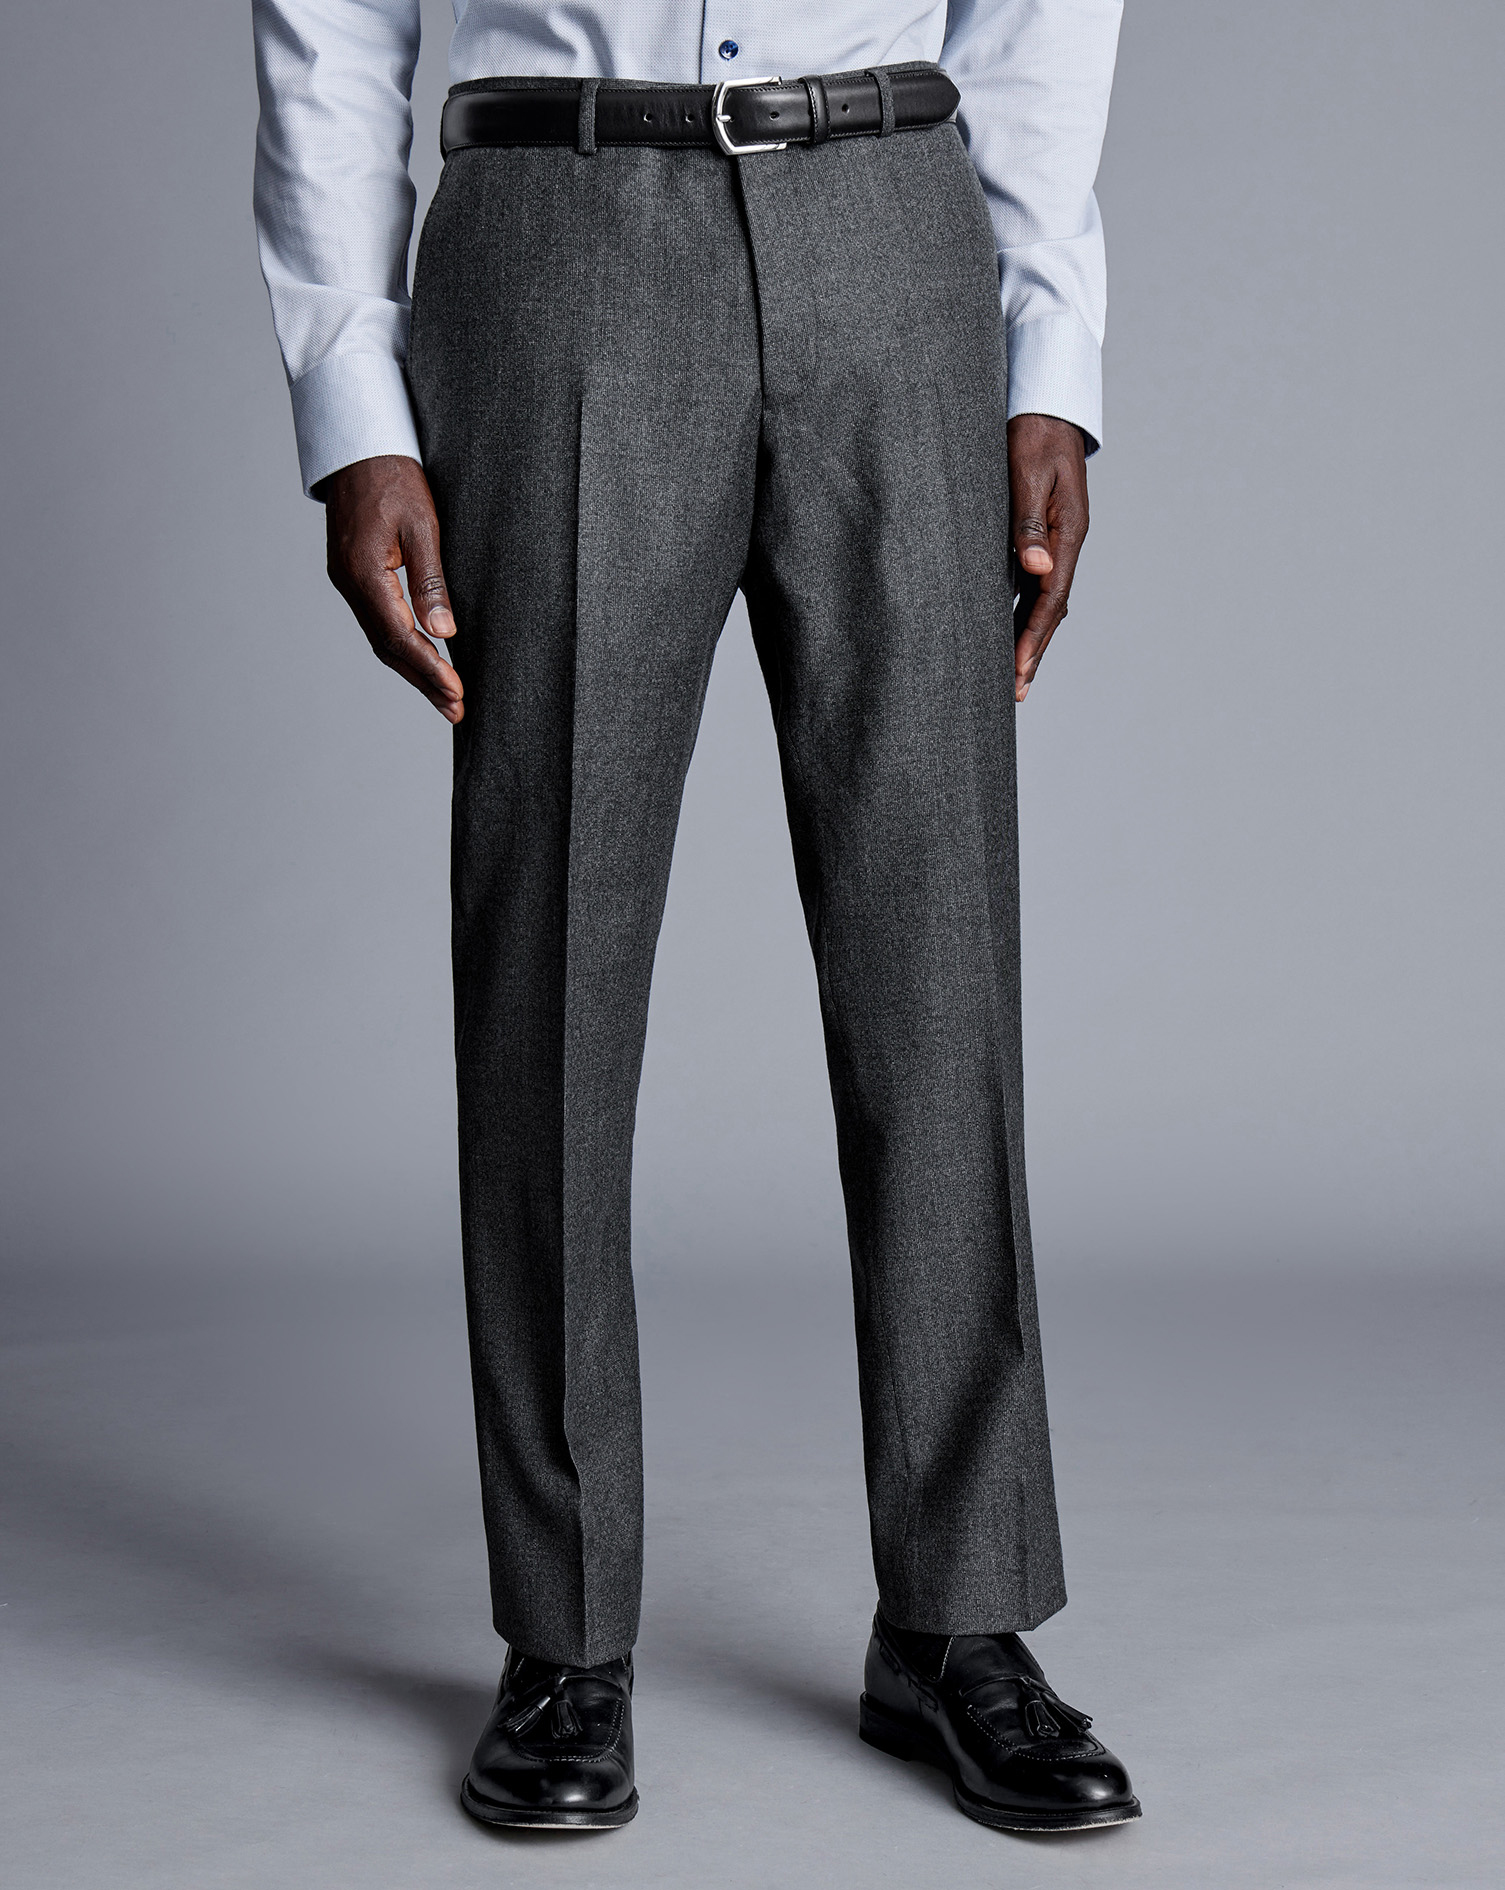 Men's Charles Tyrwhitt Italian Pindot Suit Trousers - Grey Size 30/32 Wool
